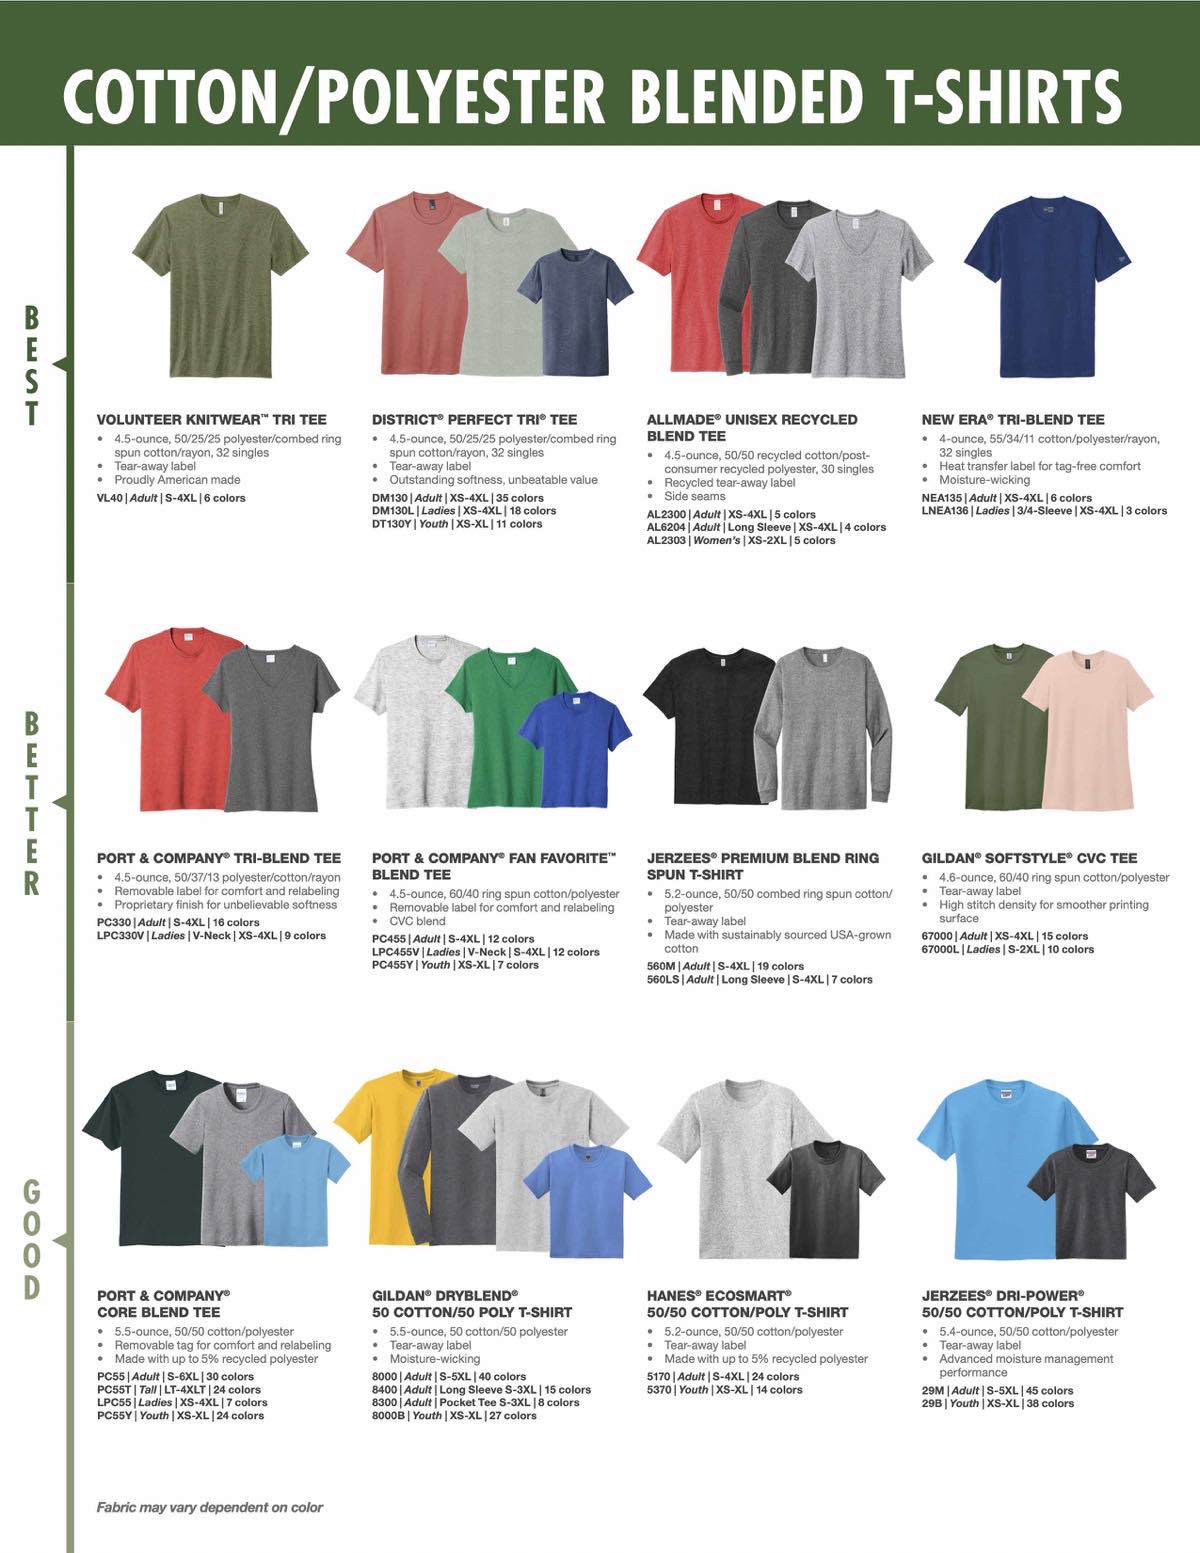 t-shirt navigator, cotton/polyester blend t-shirts